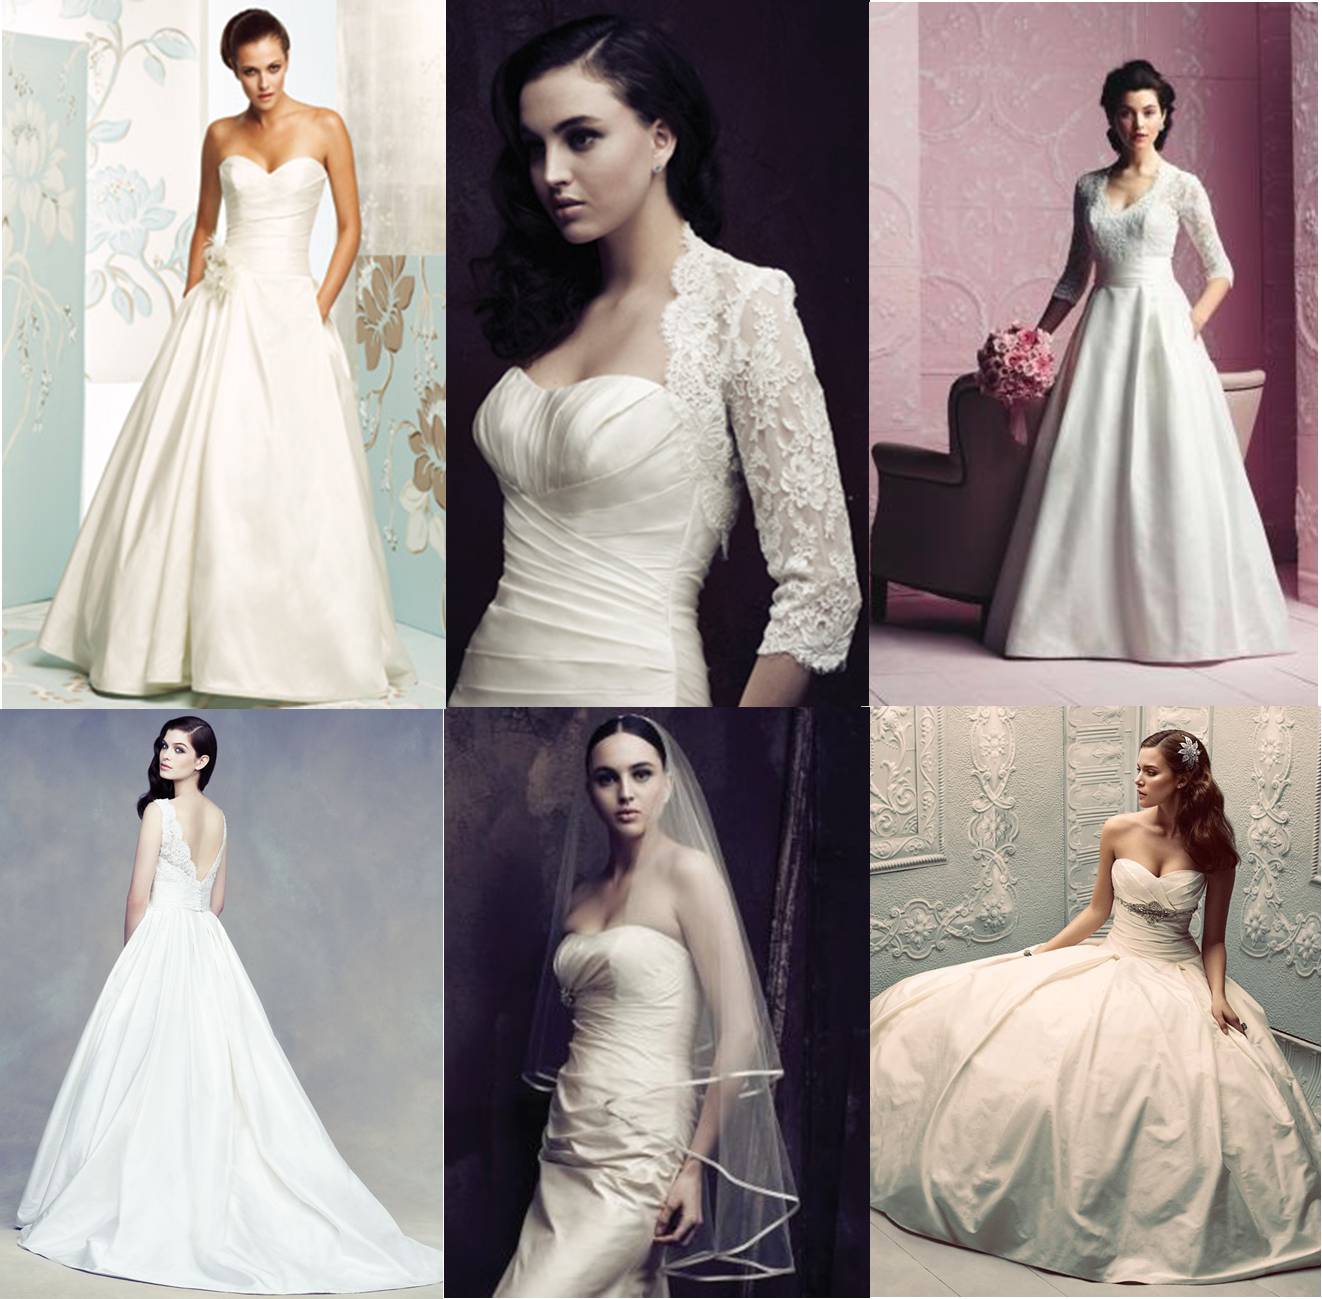 Paloma blanca wedding dress 3901